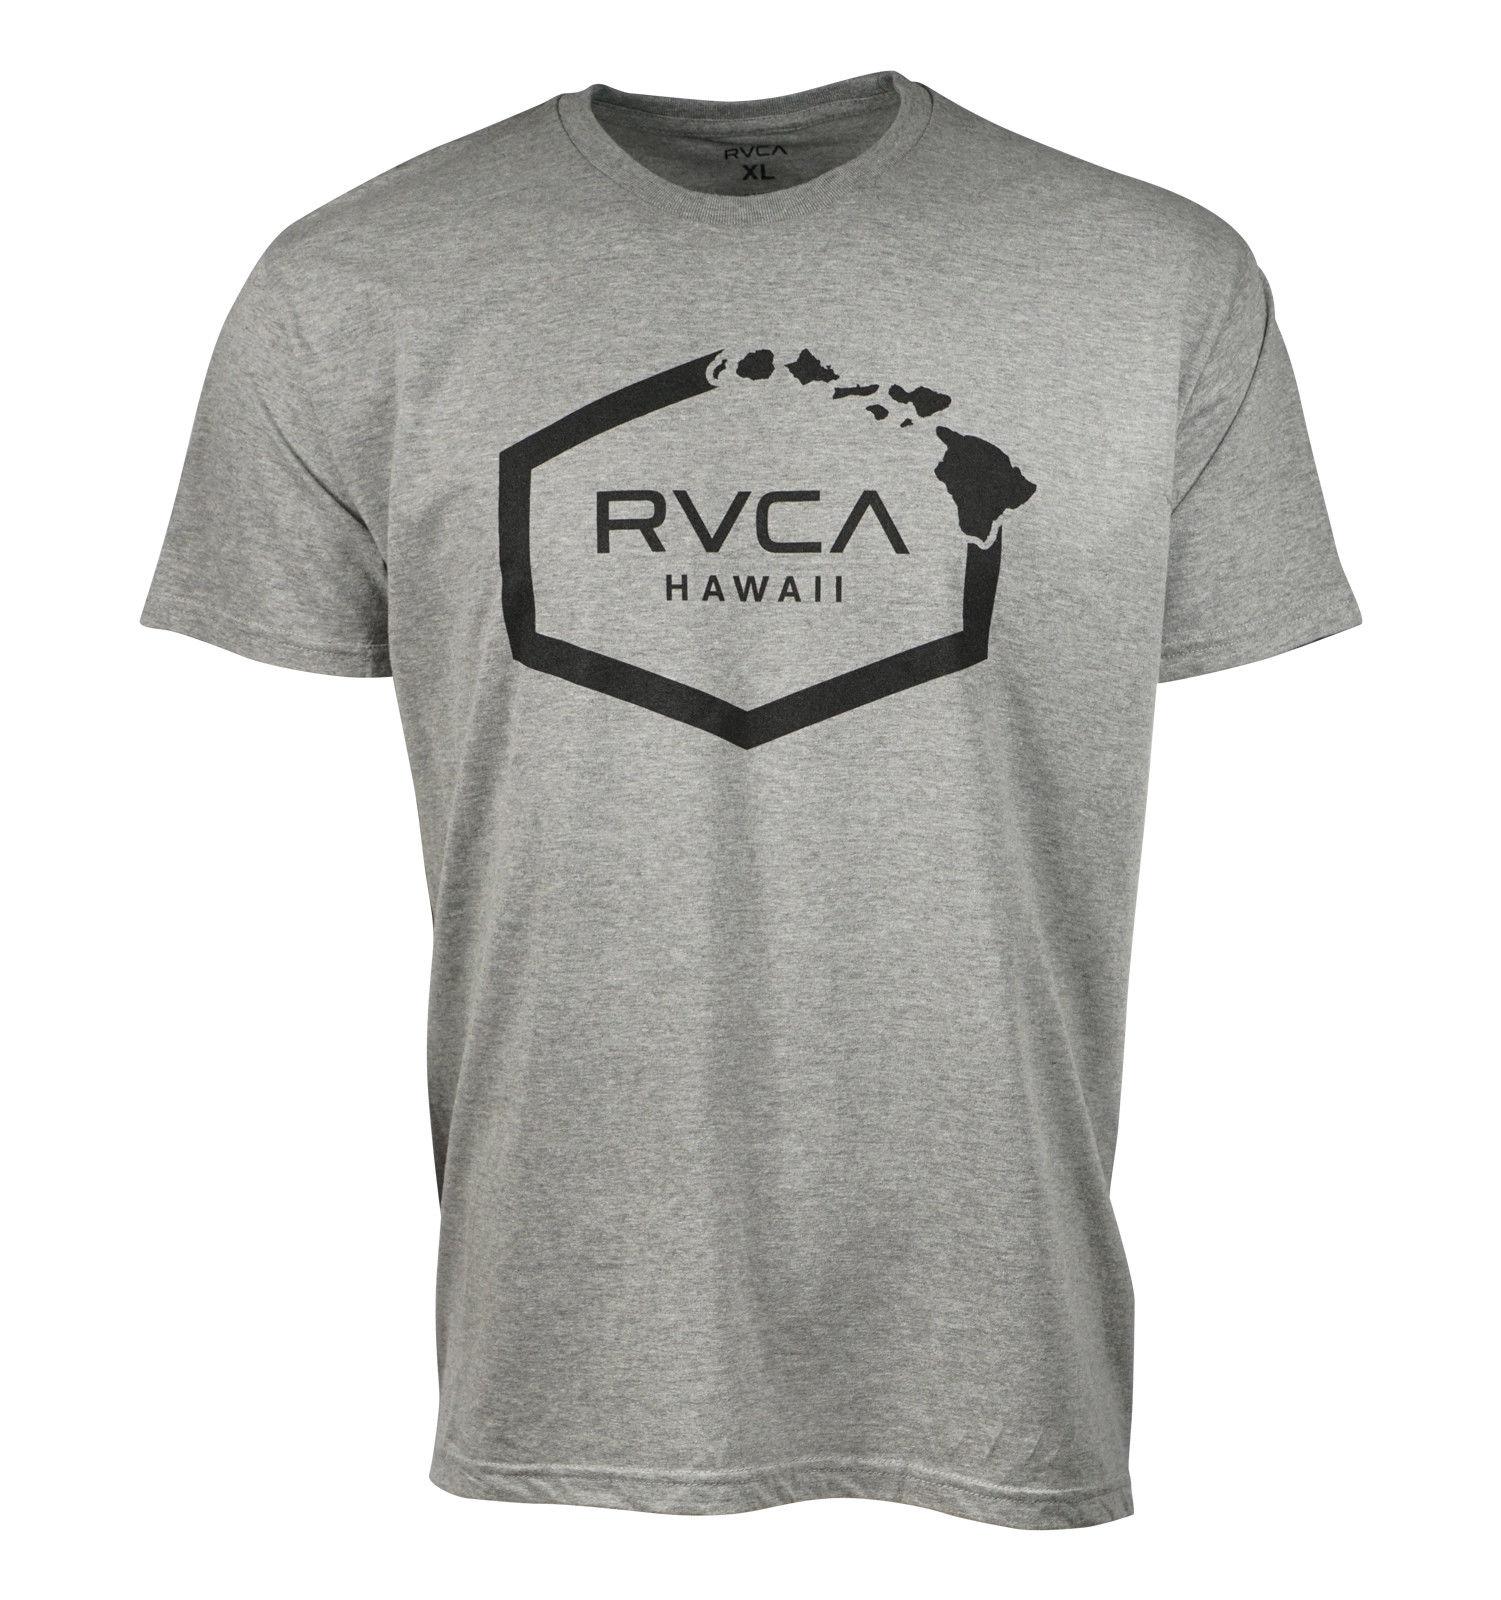 RVCA Hawaii Logo - RVCA MENS HAWAII LOGO T SHIRT The New Short Sleeve, T-Shirt Funny ...